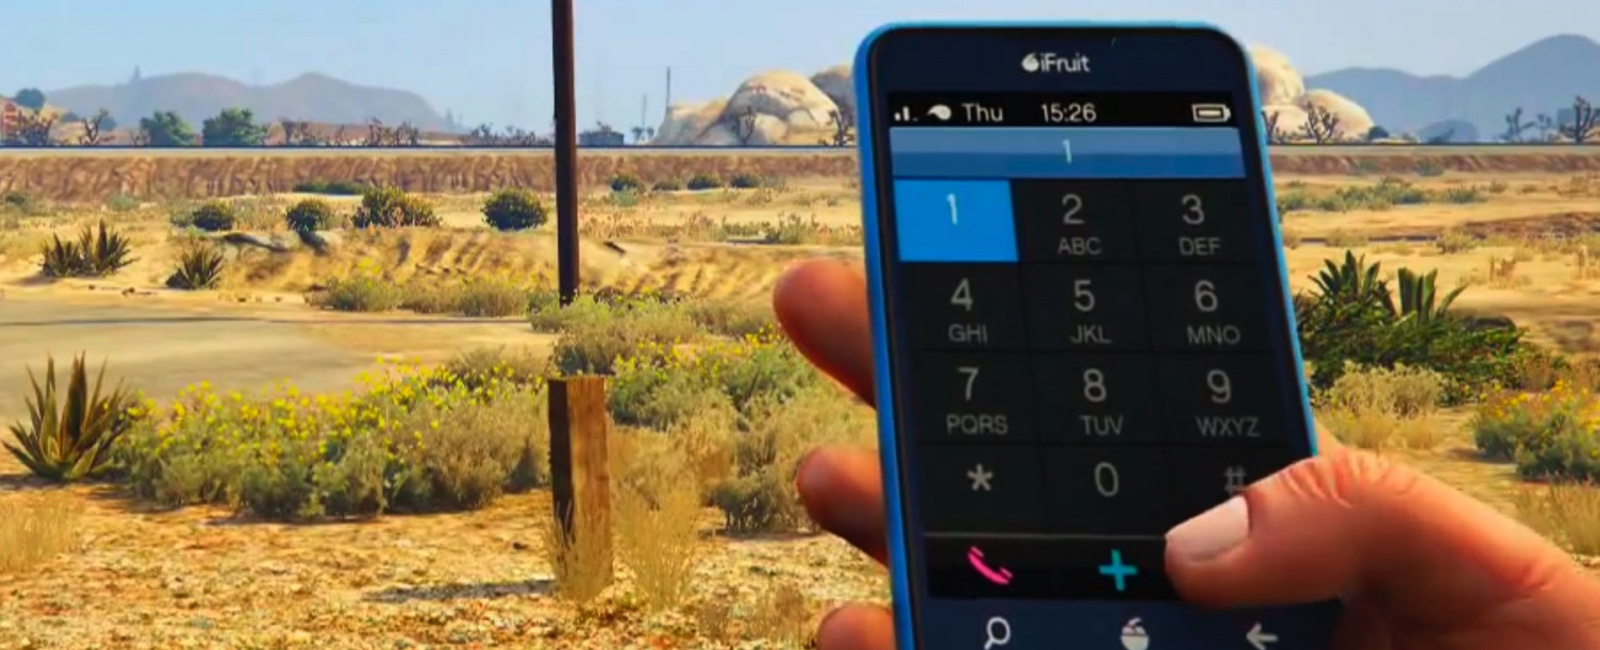 GTA 5 mobile phone cheats